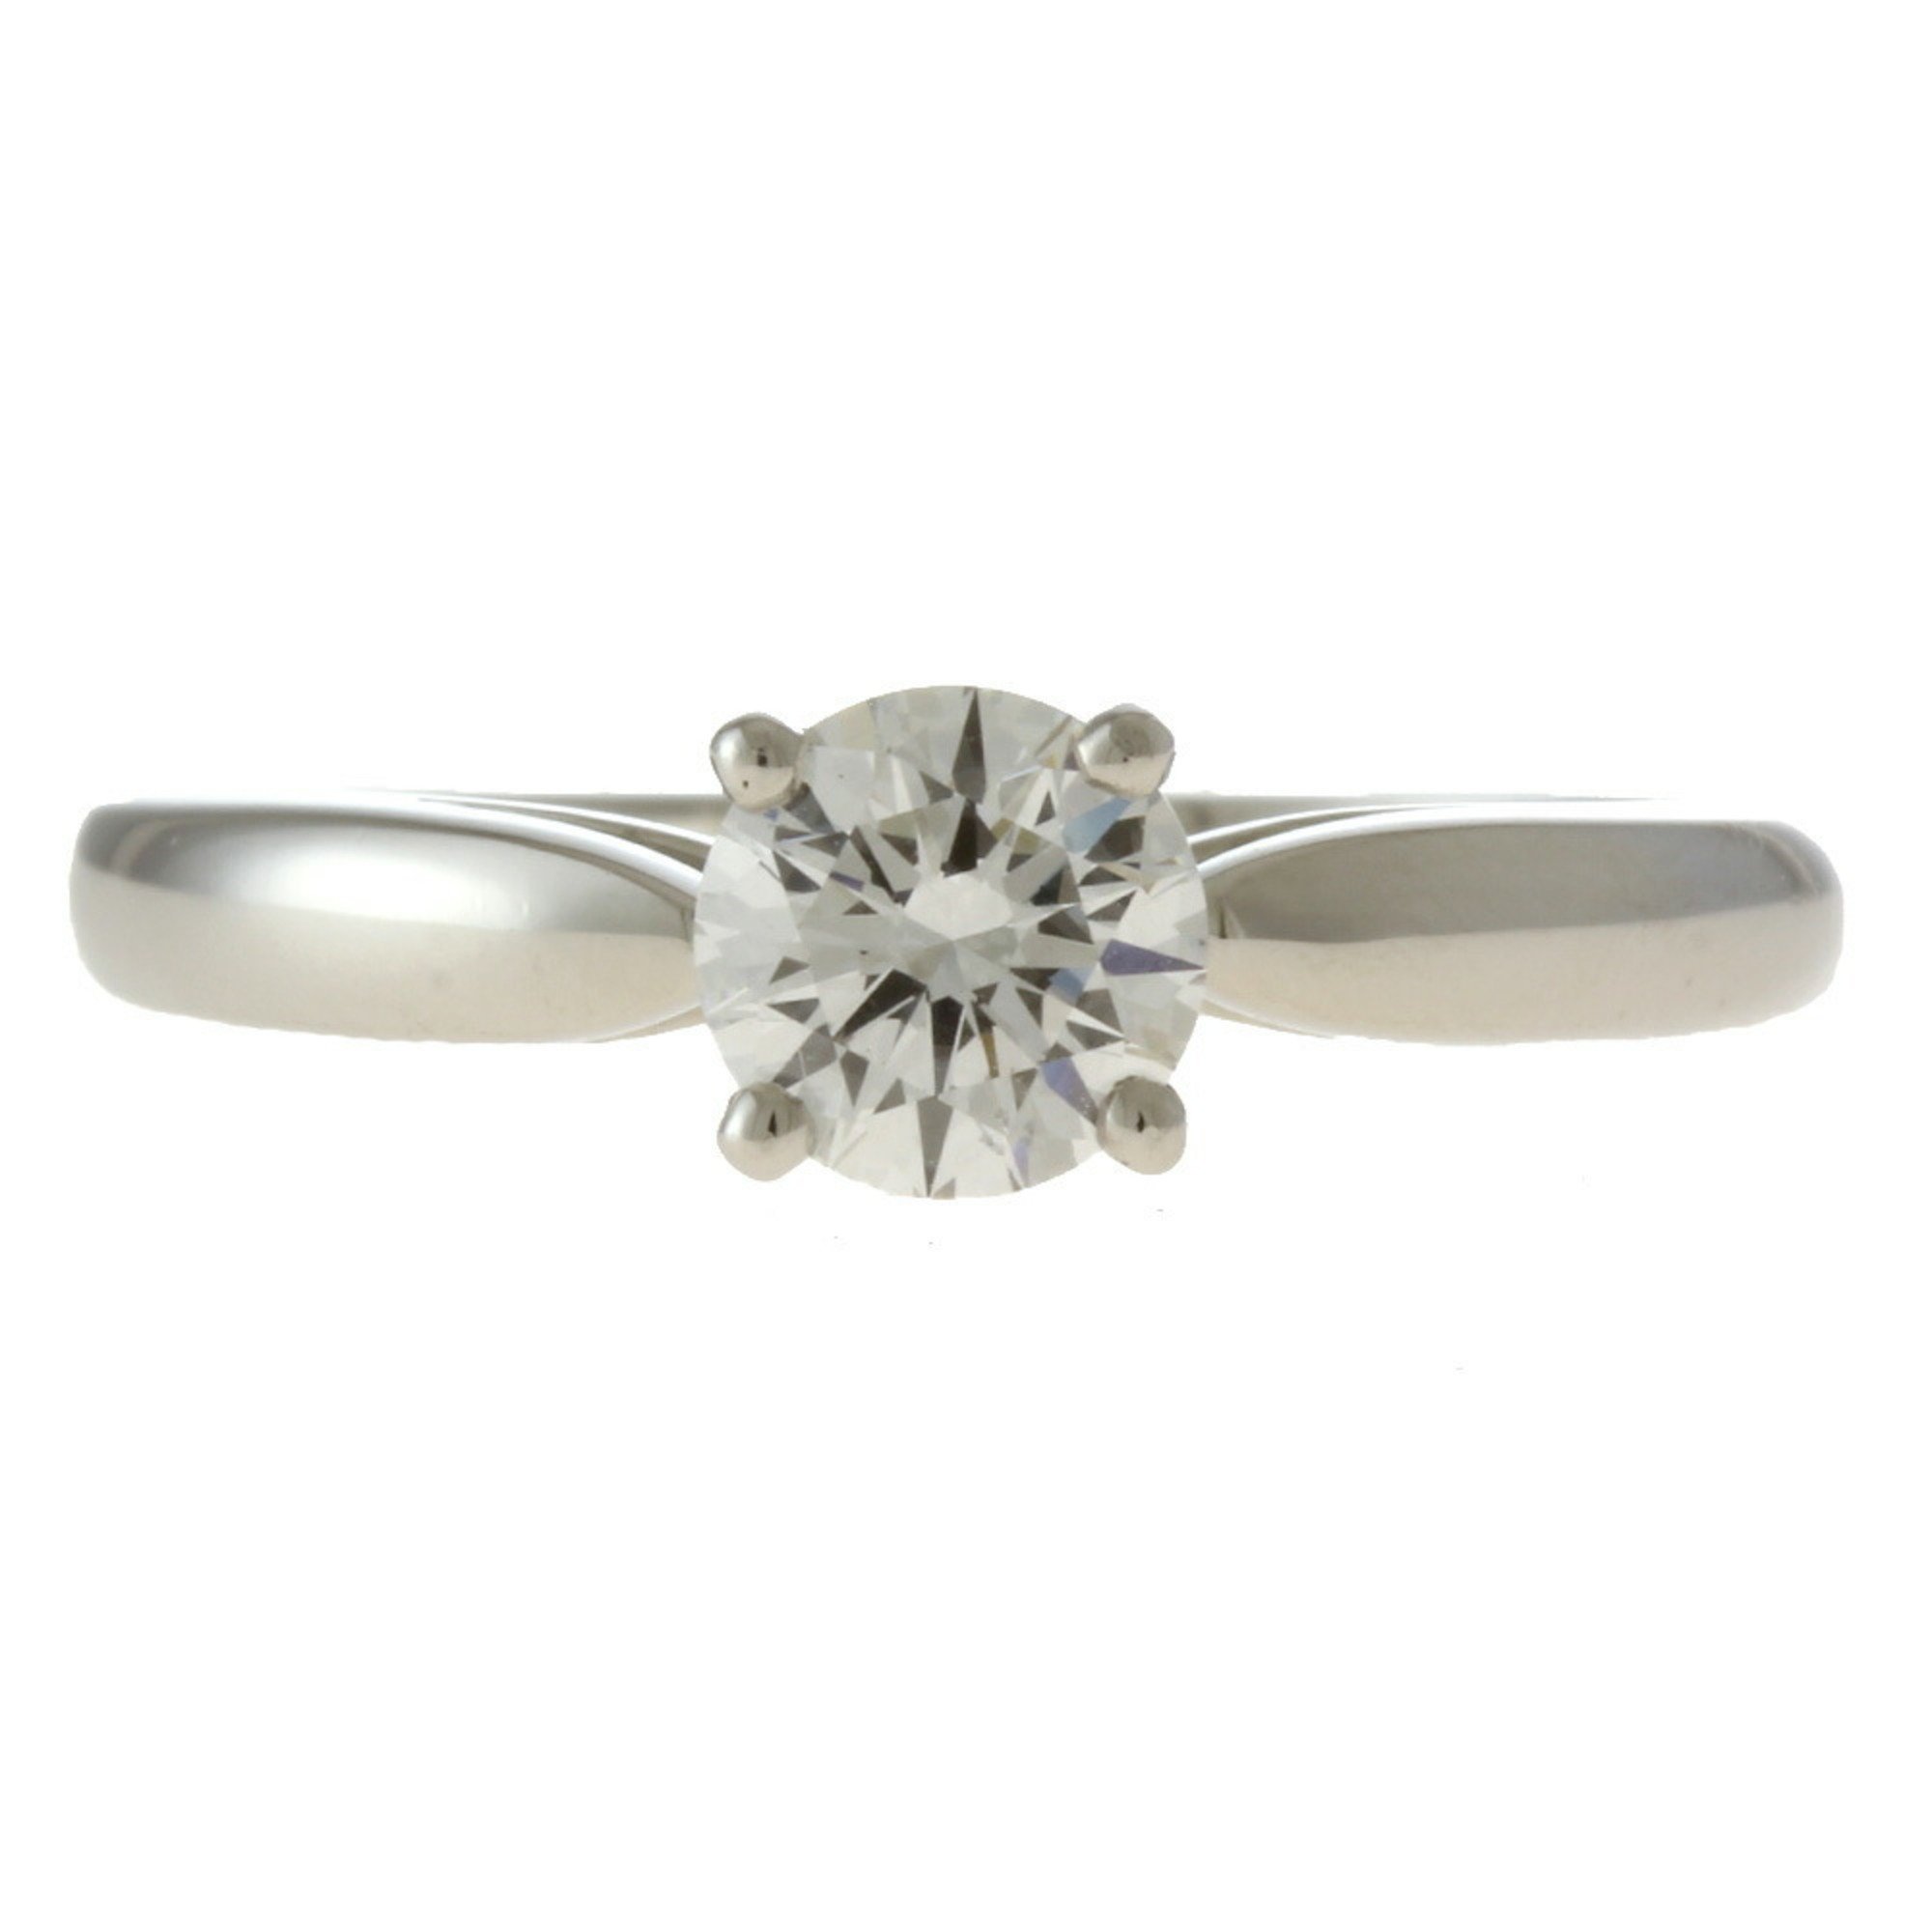 Van Cleef & Arpels Bonheur Ring No. 8.5 Pt950 Platinum Diamond Women's